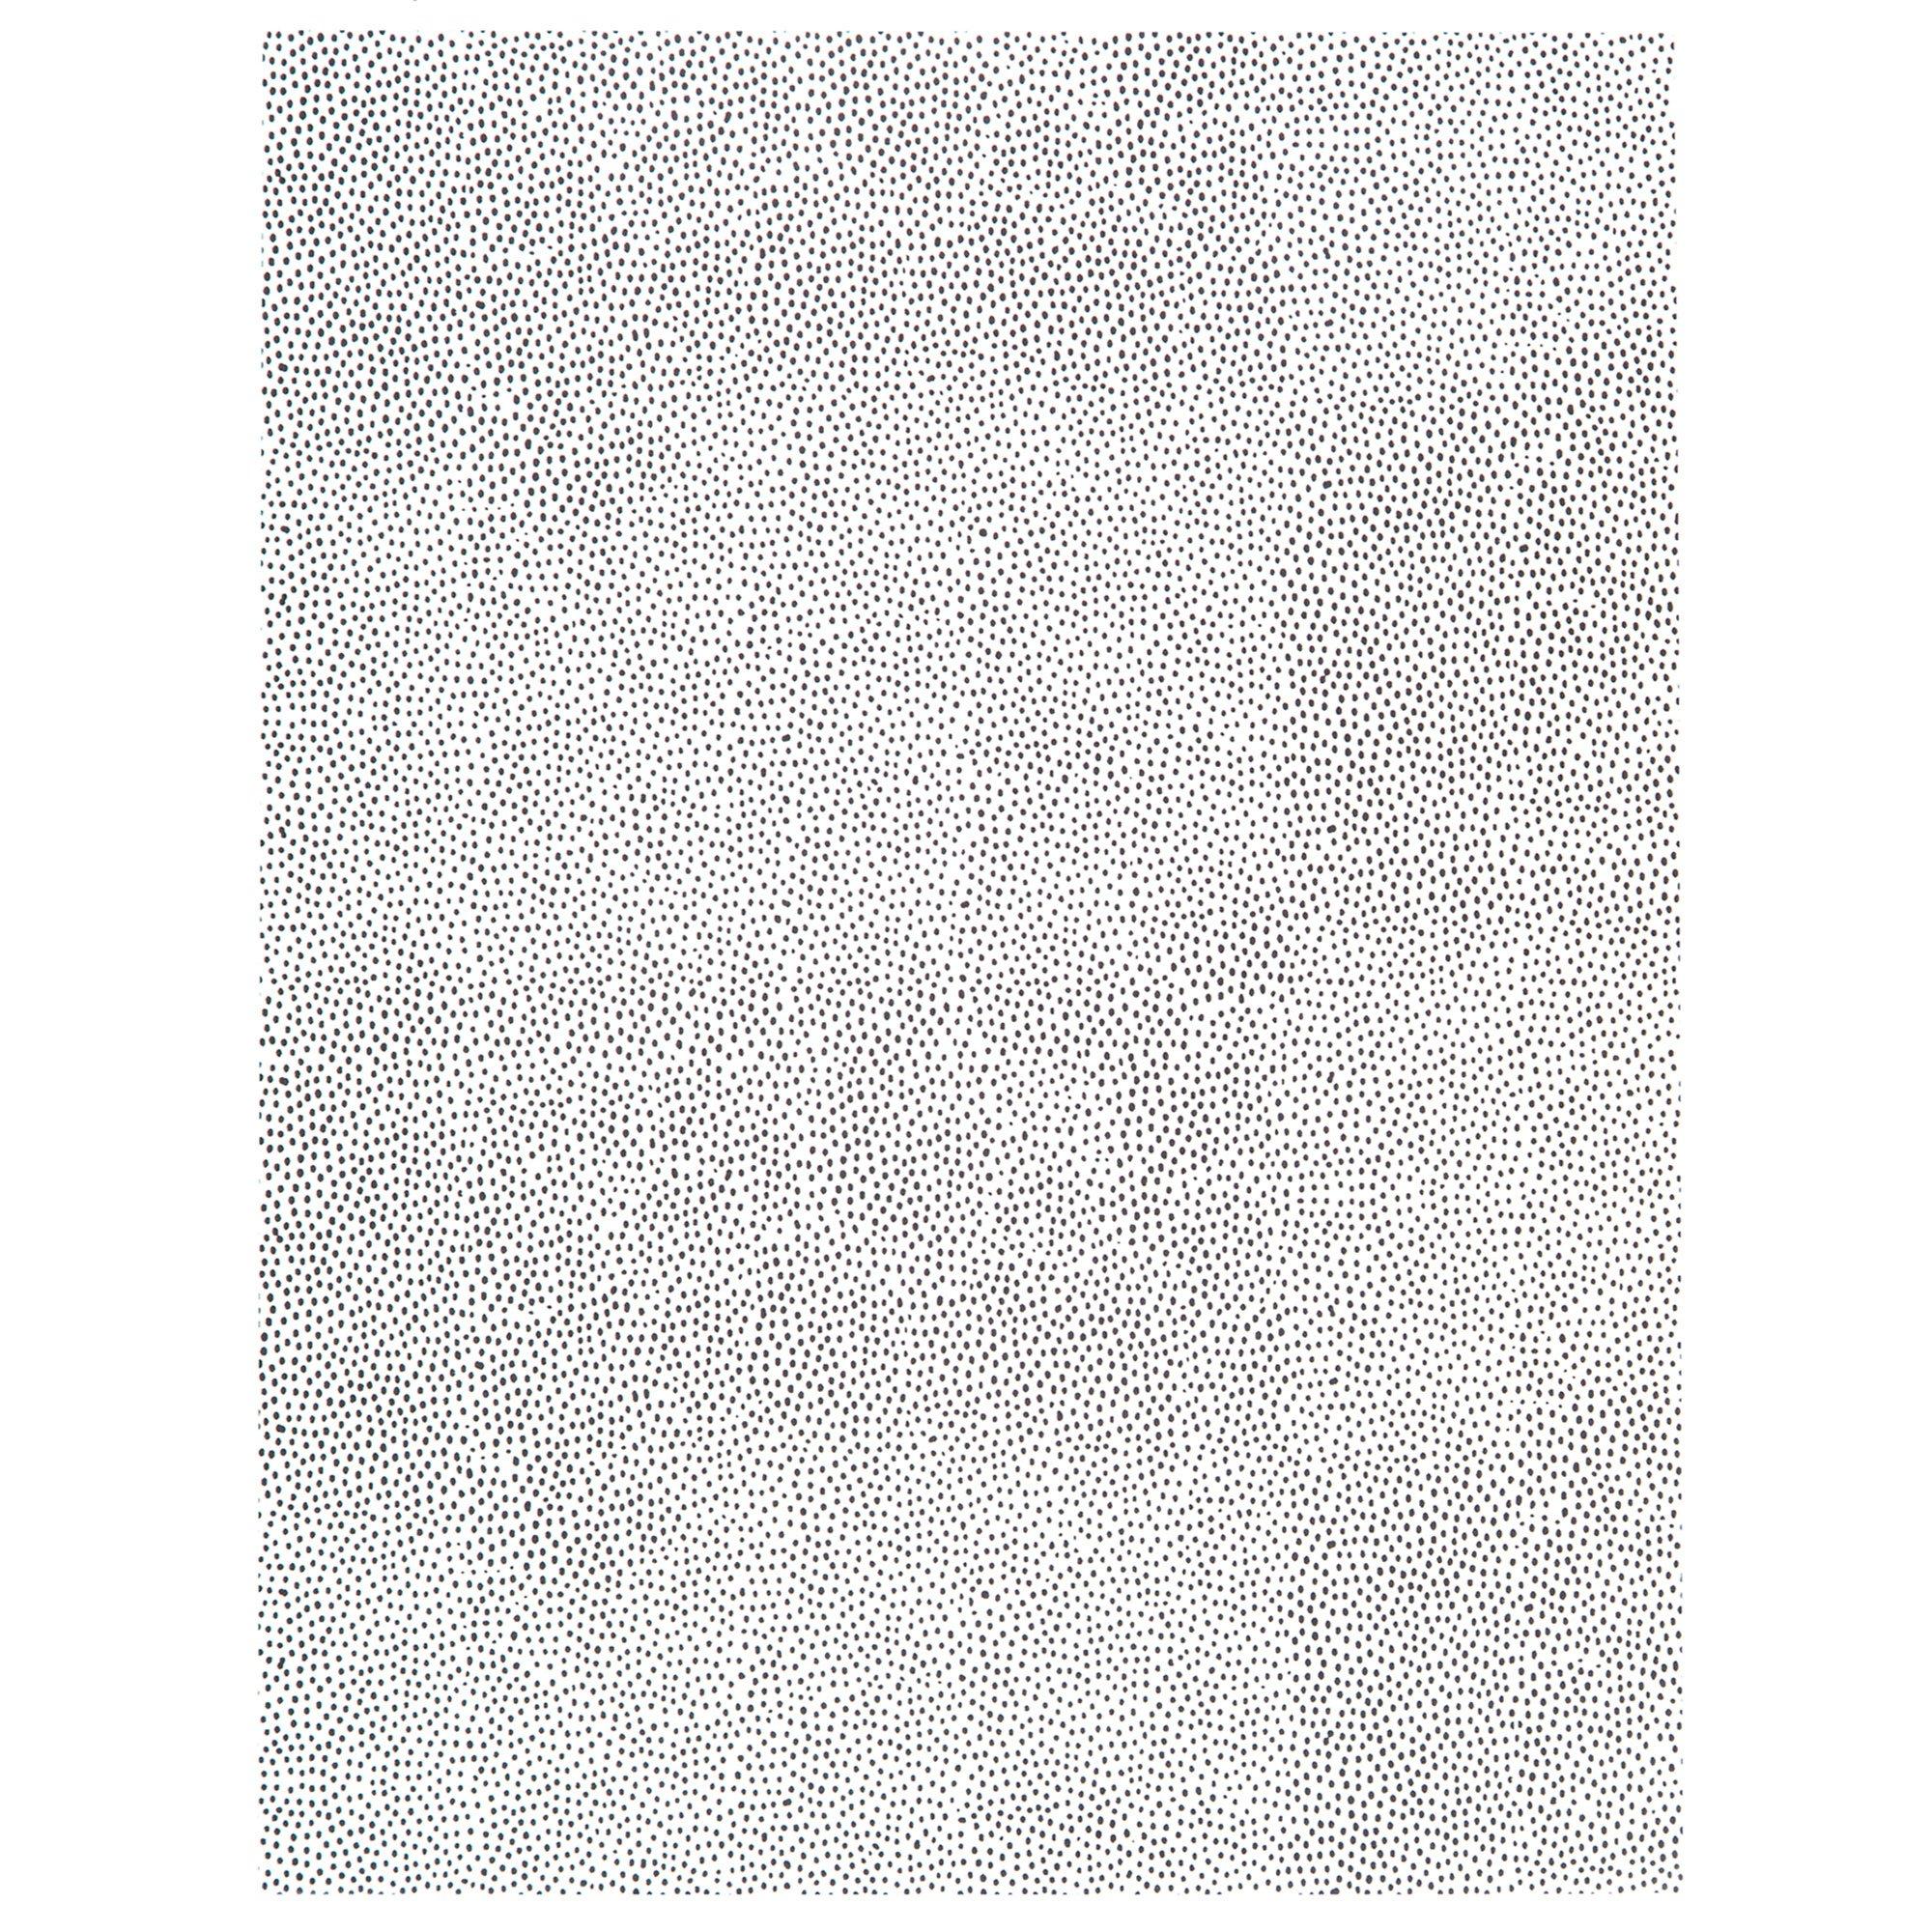 Navy & White Floral Scrapbook Paper - 8 1/2 x 11